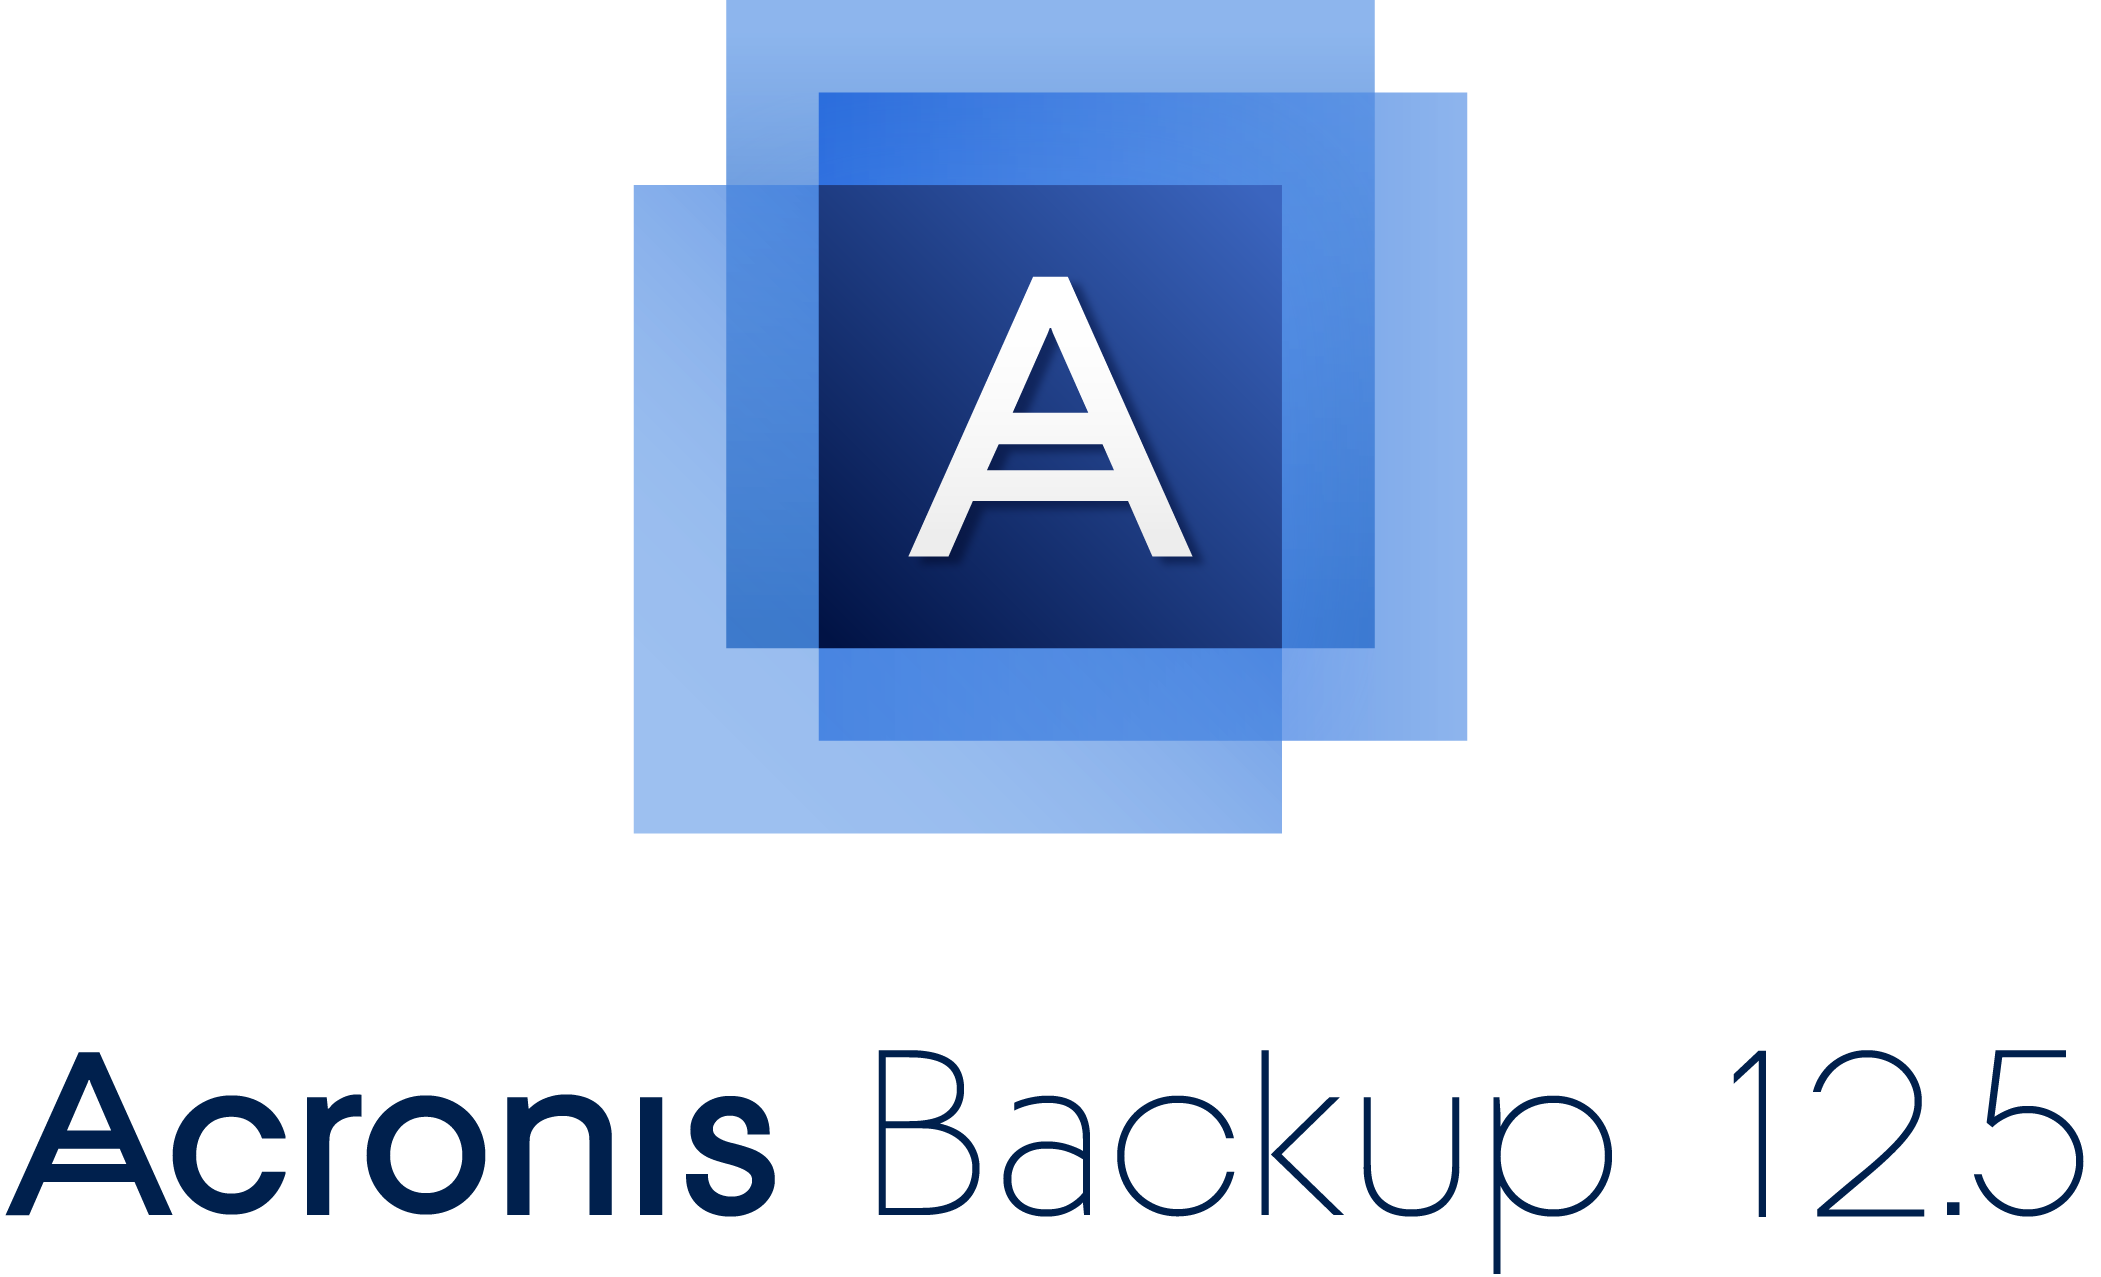 Acronis_Backup 12.5 (white back name).png